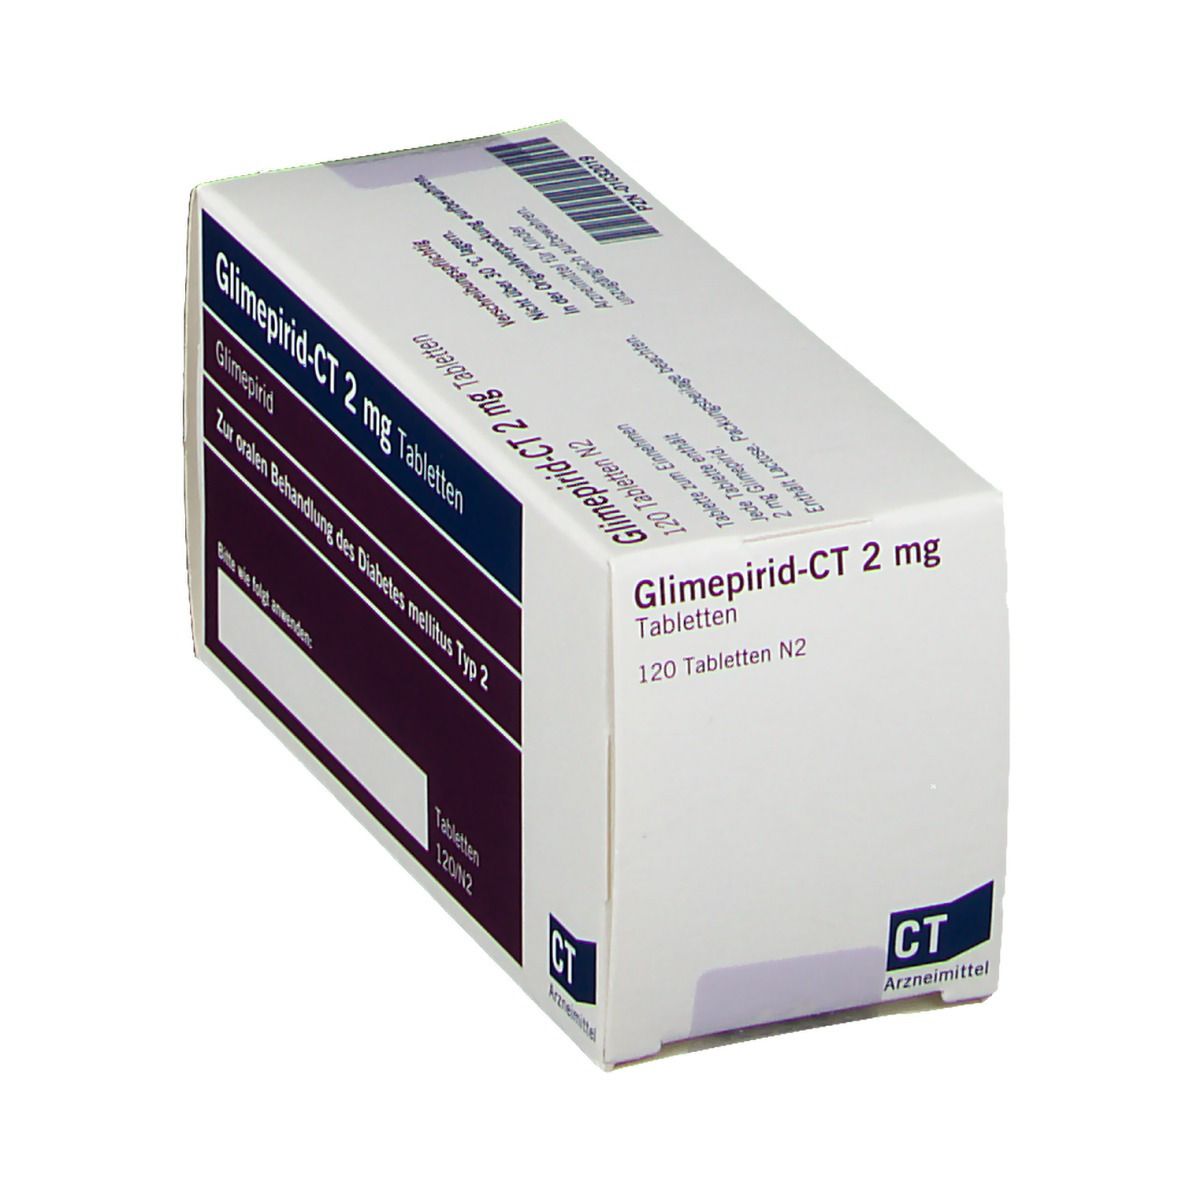 Glimepirid-CT 2 mg